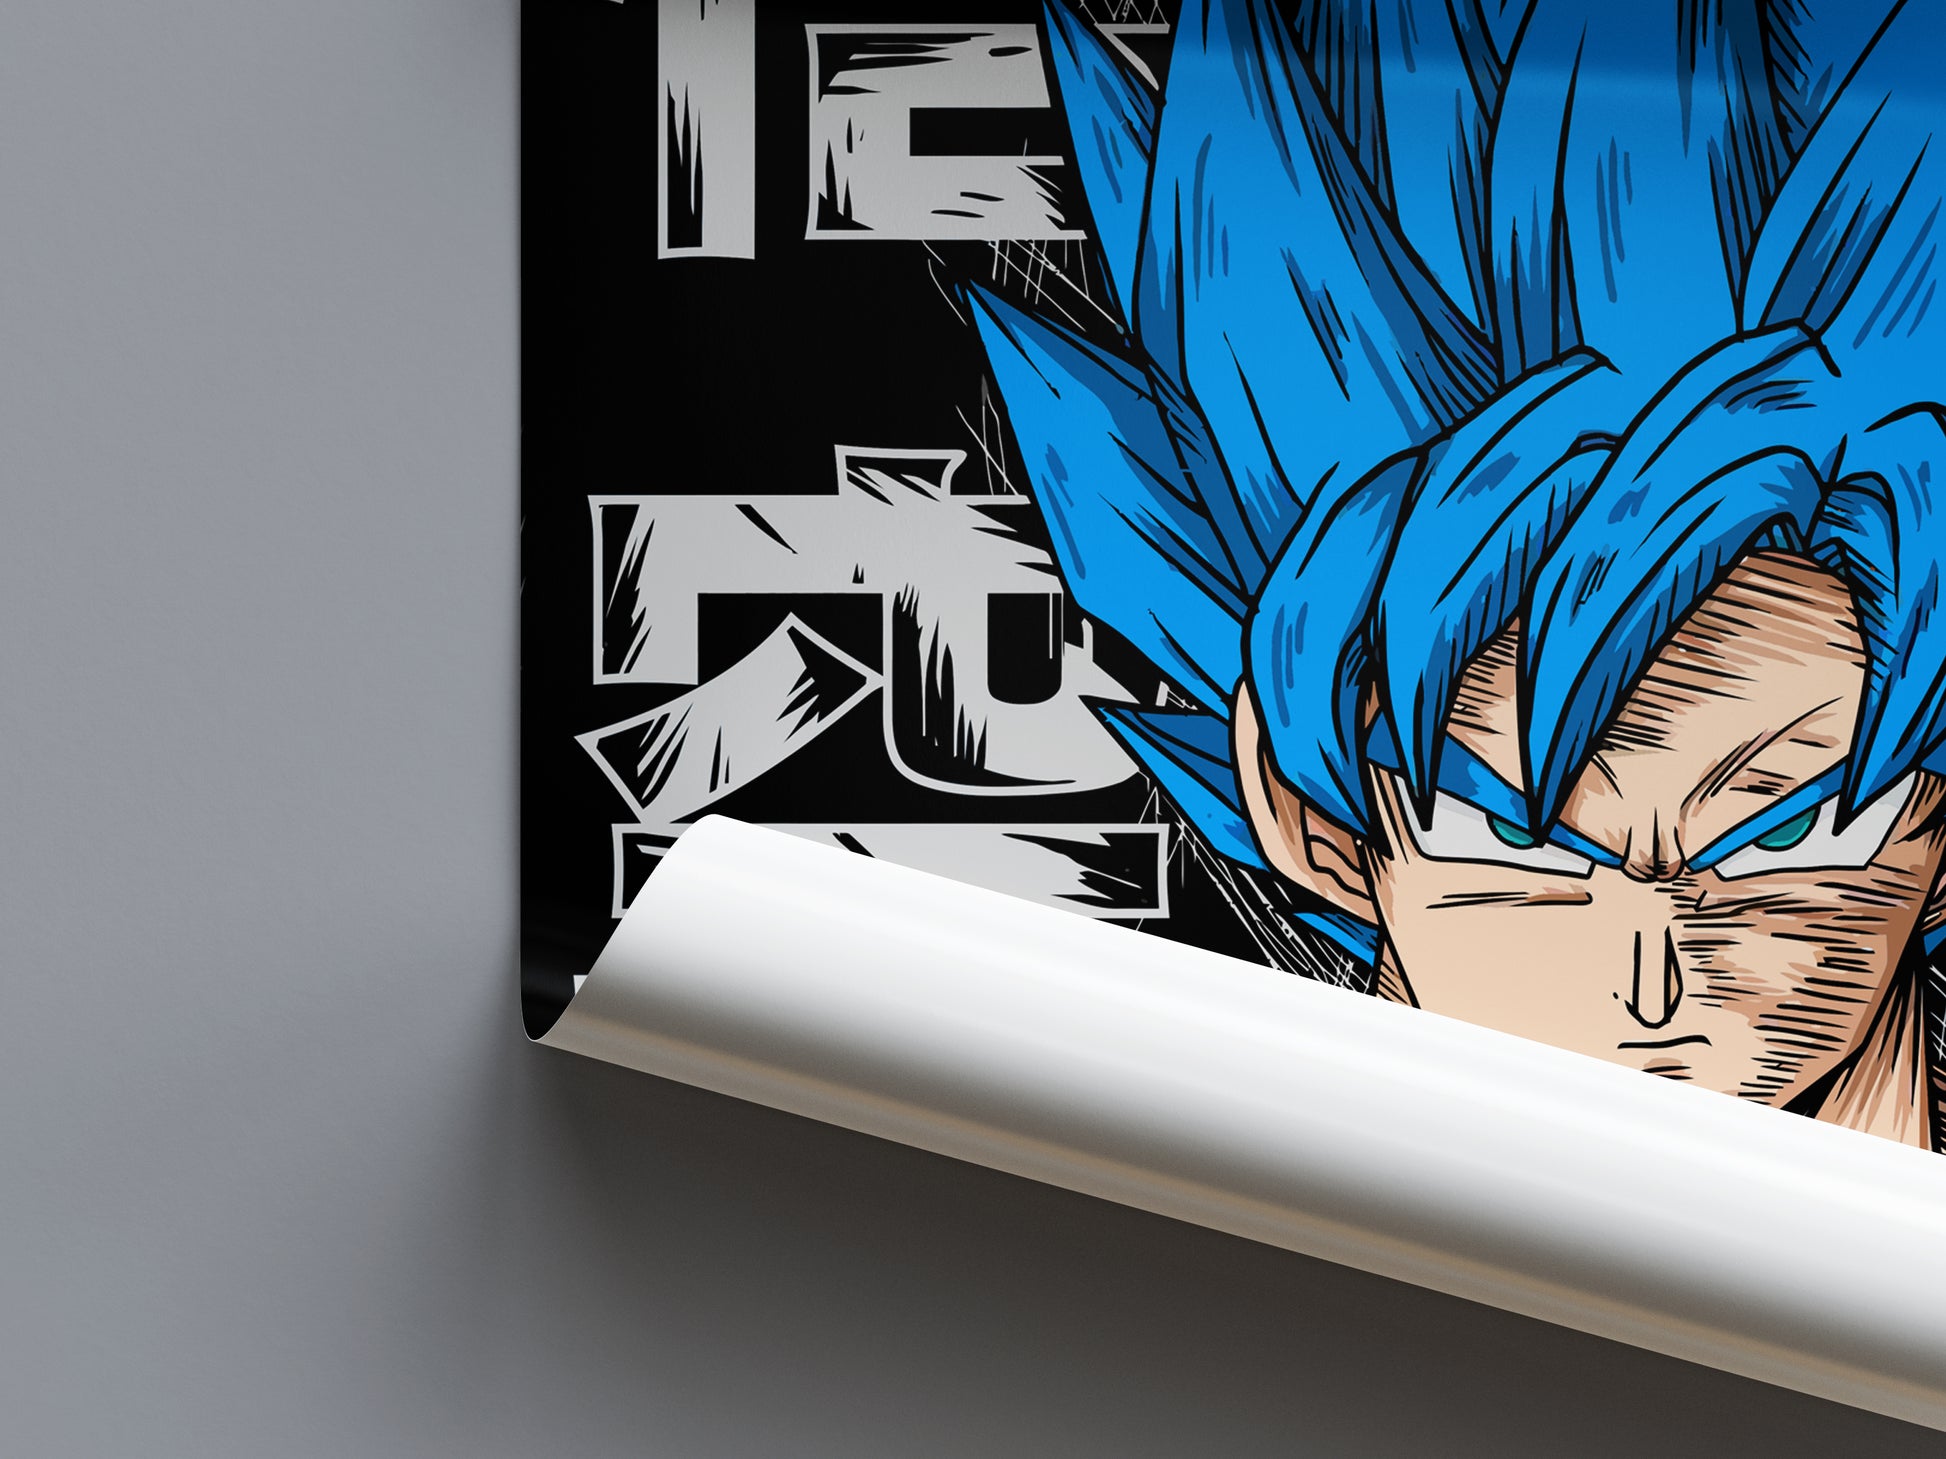 Goku Super Saiyan Blue Poster